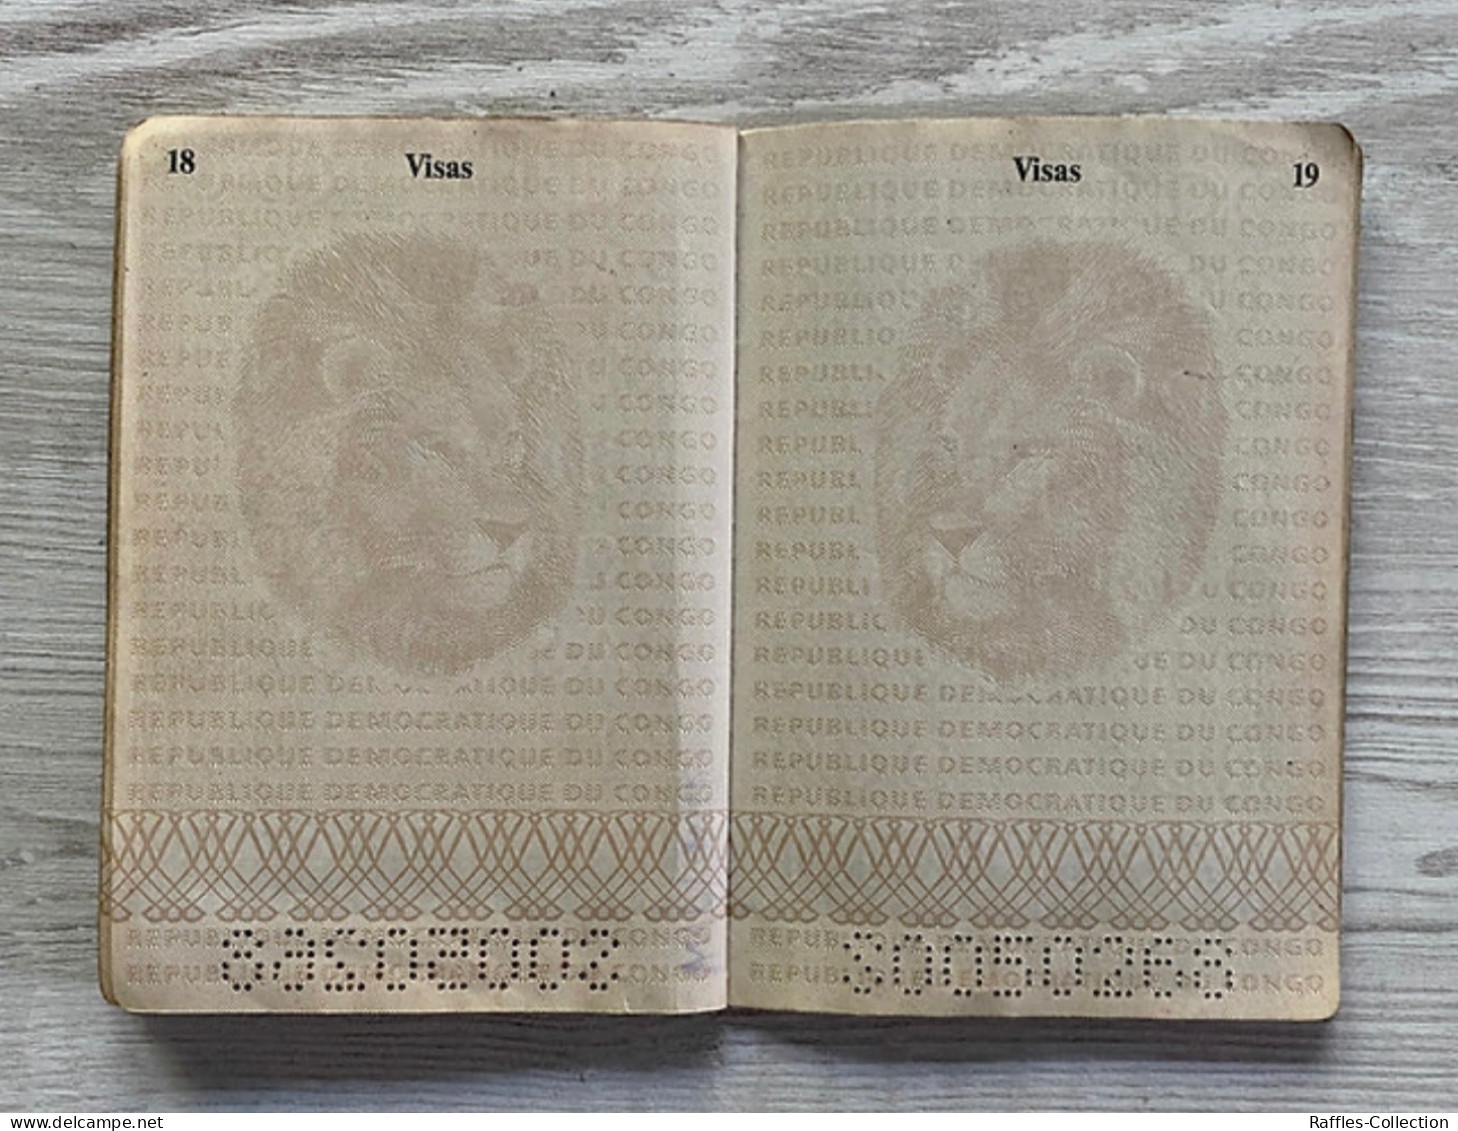 Congo Service passport passeport reisepass pasaporte passaporto